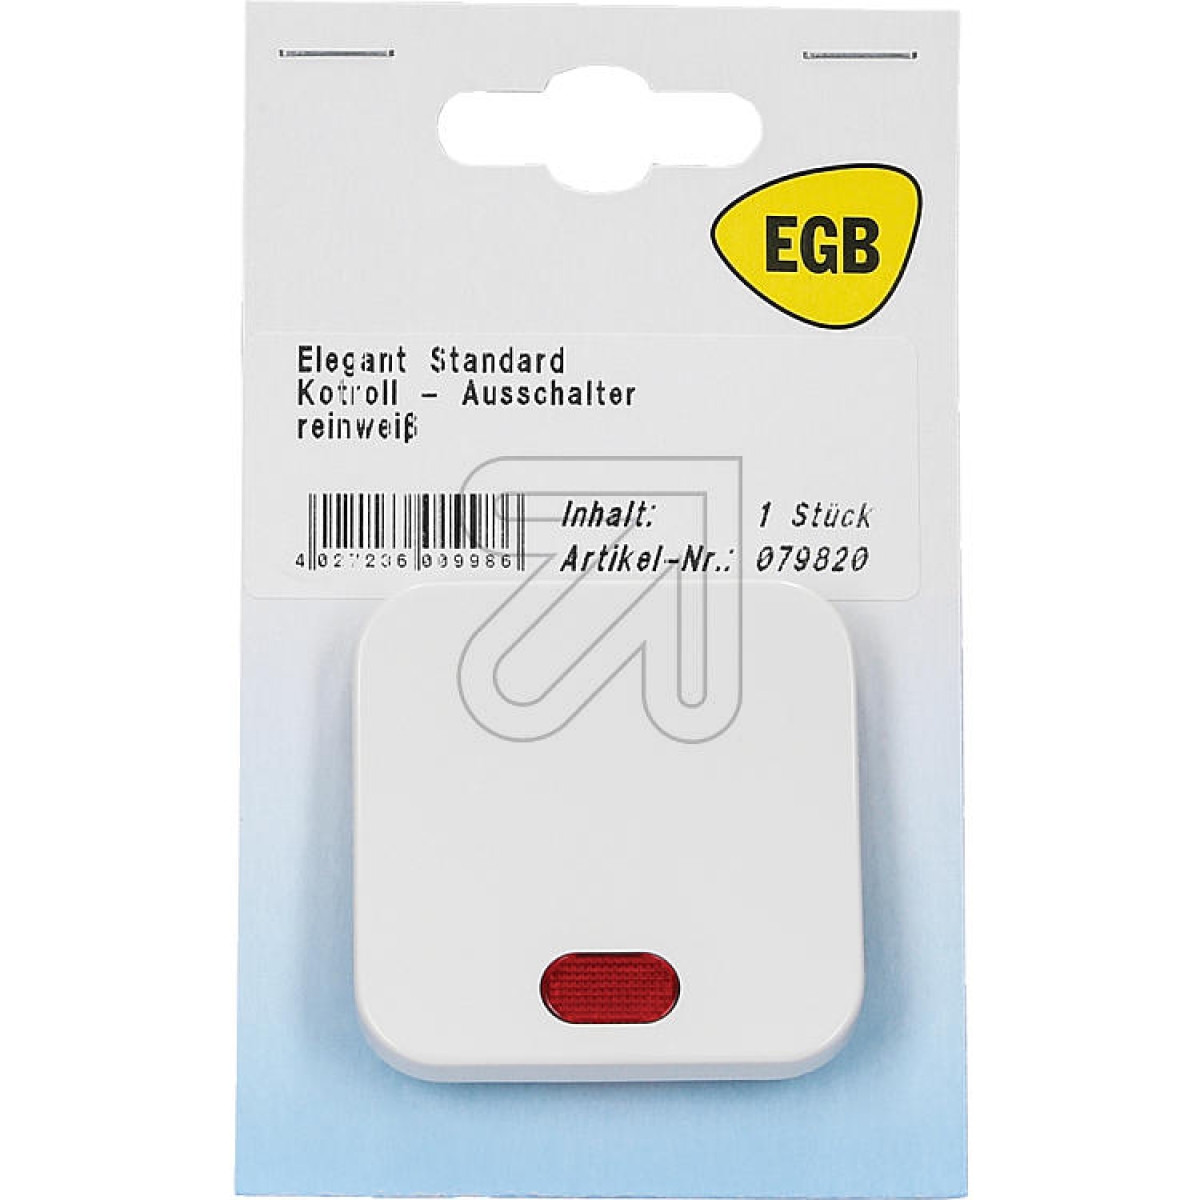 EGBElegant Standard reinweiß SB Schalter Kontroll-AusArtikel-Nr: 079820